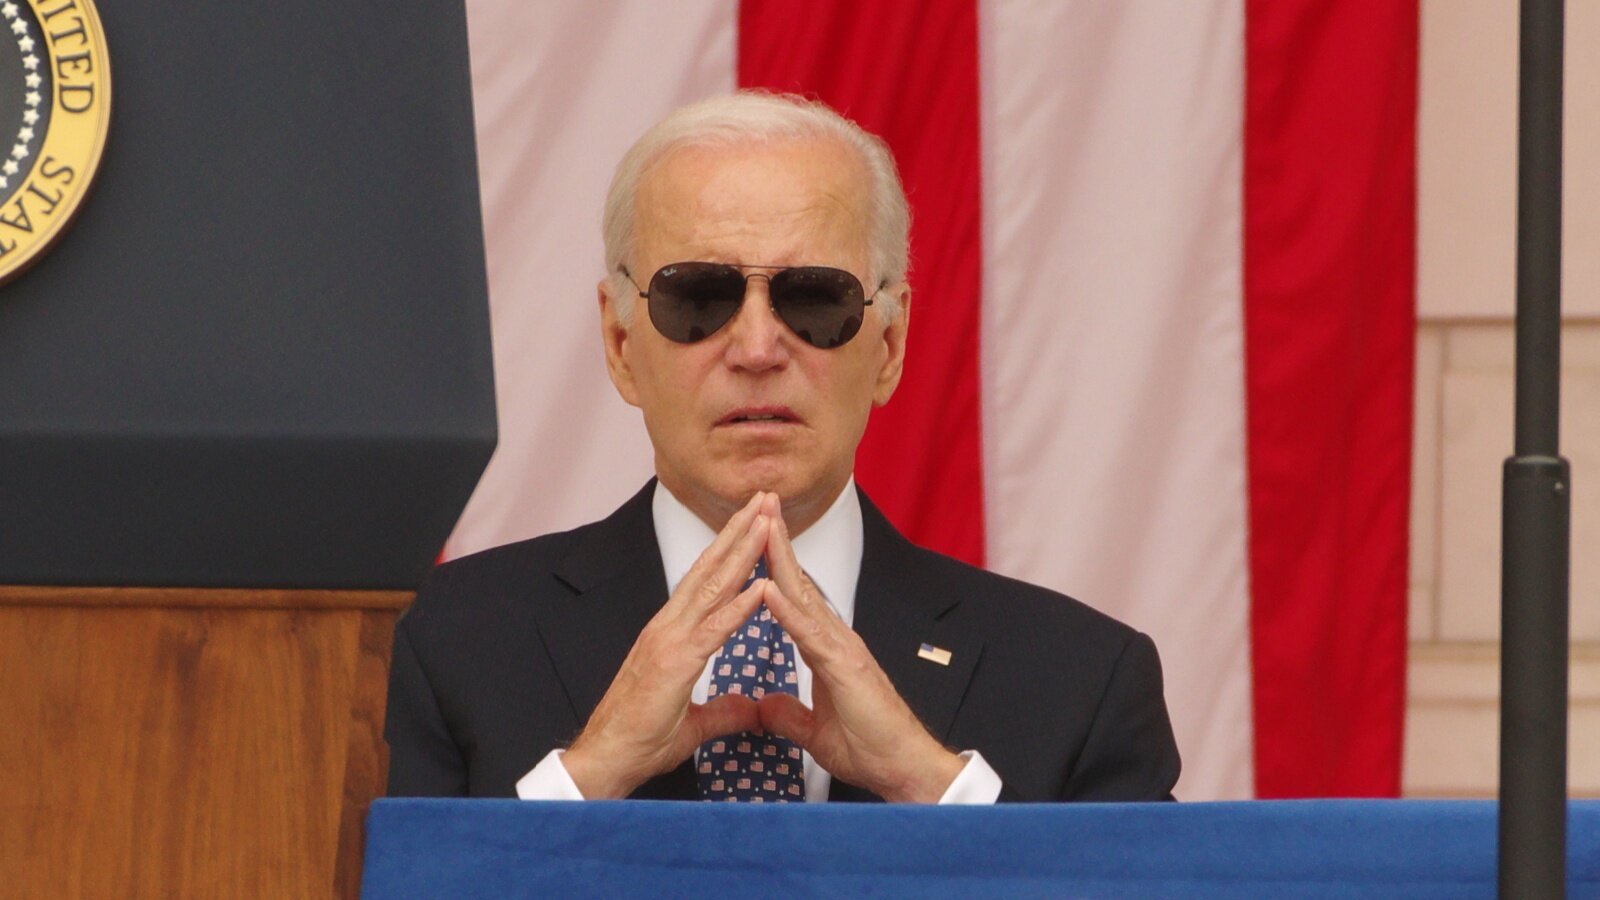 'Joe Biden Is Dead' Meme Coins Are Spreading as Quickly as the Wild Rumors